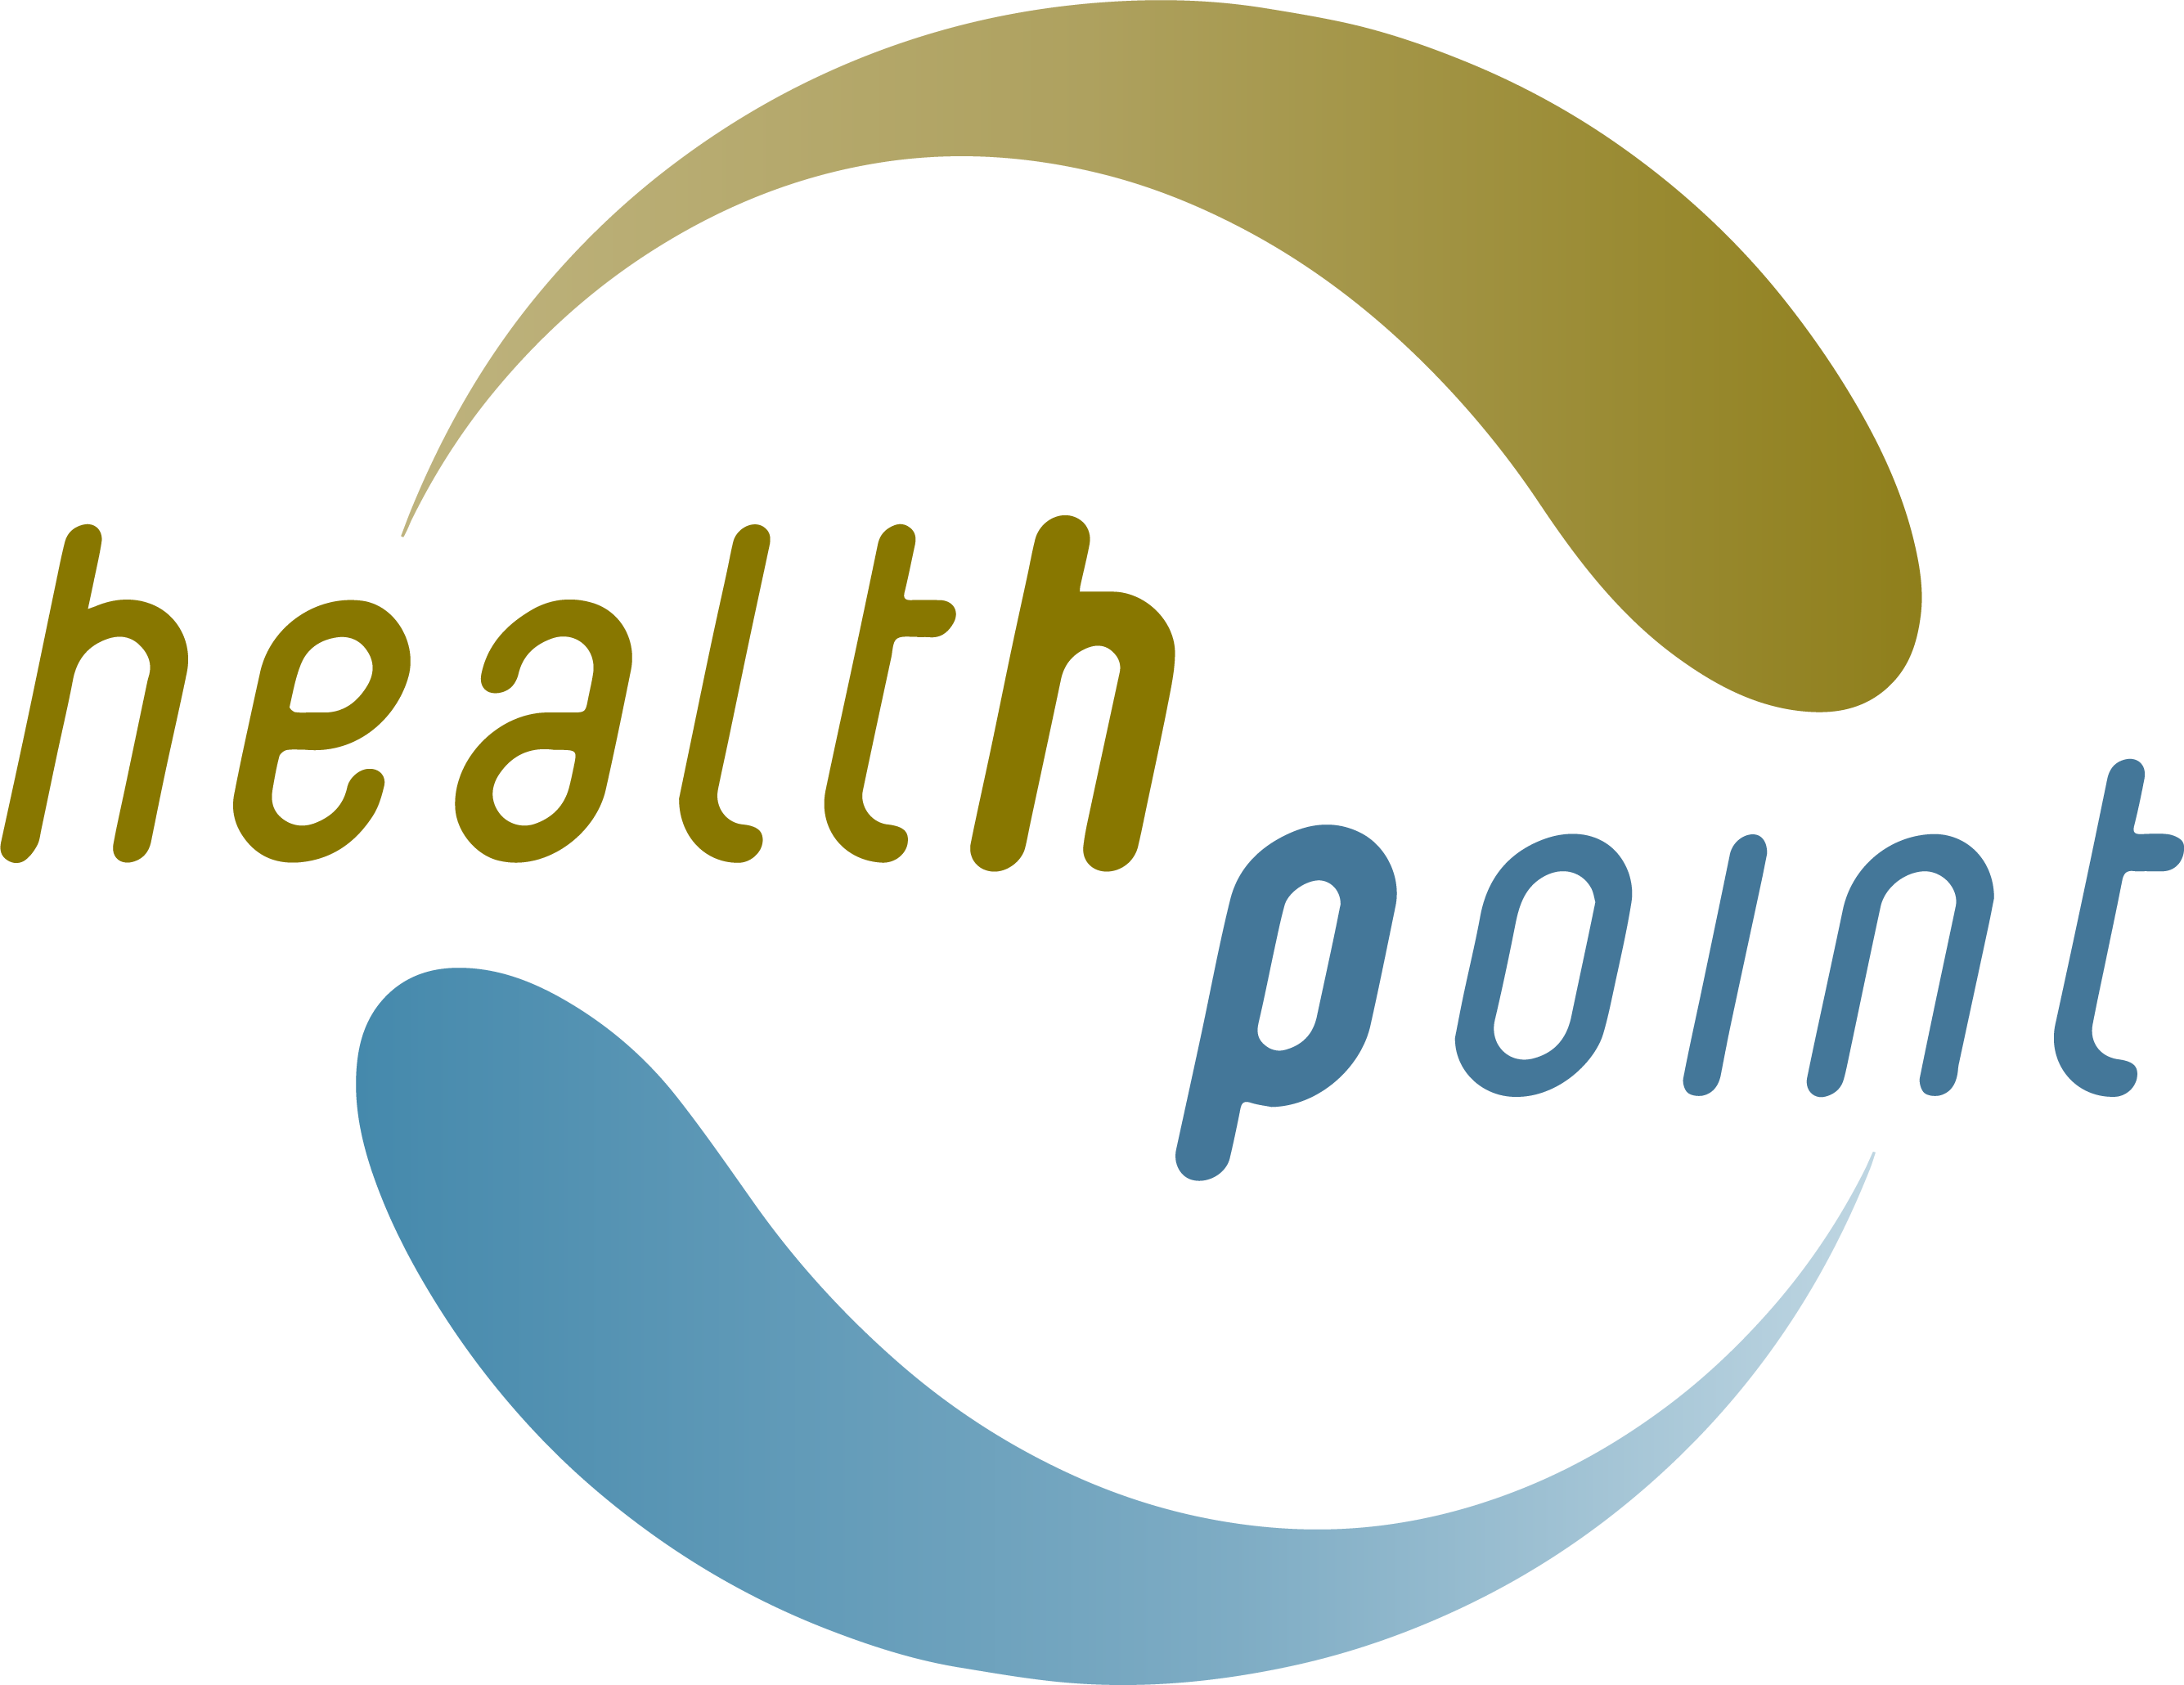 Health point logo